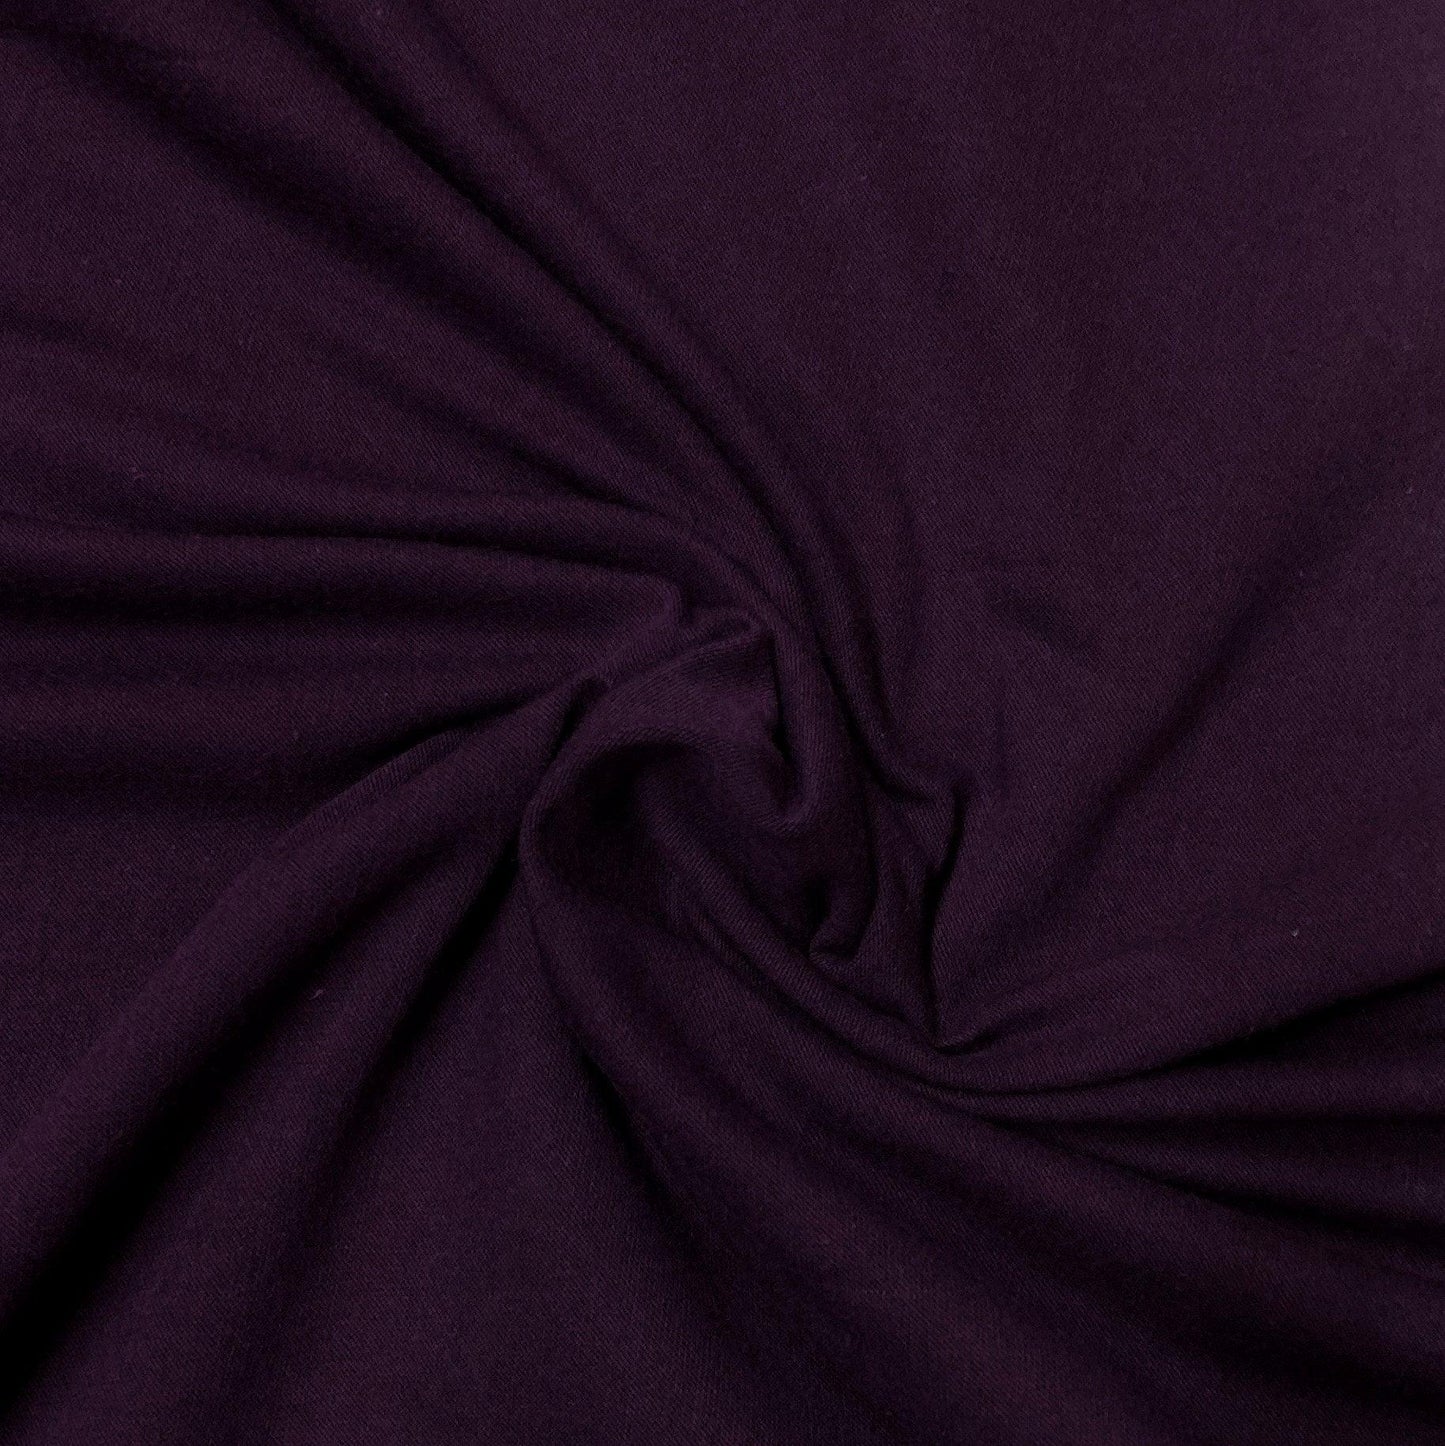 Eggplant Cotton/Spandex Jersey Fabric - 200 GSM - Nature's Fabrics